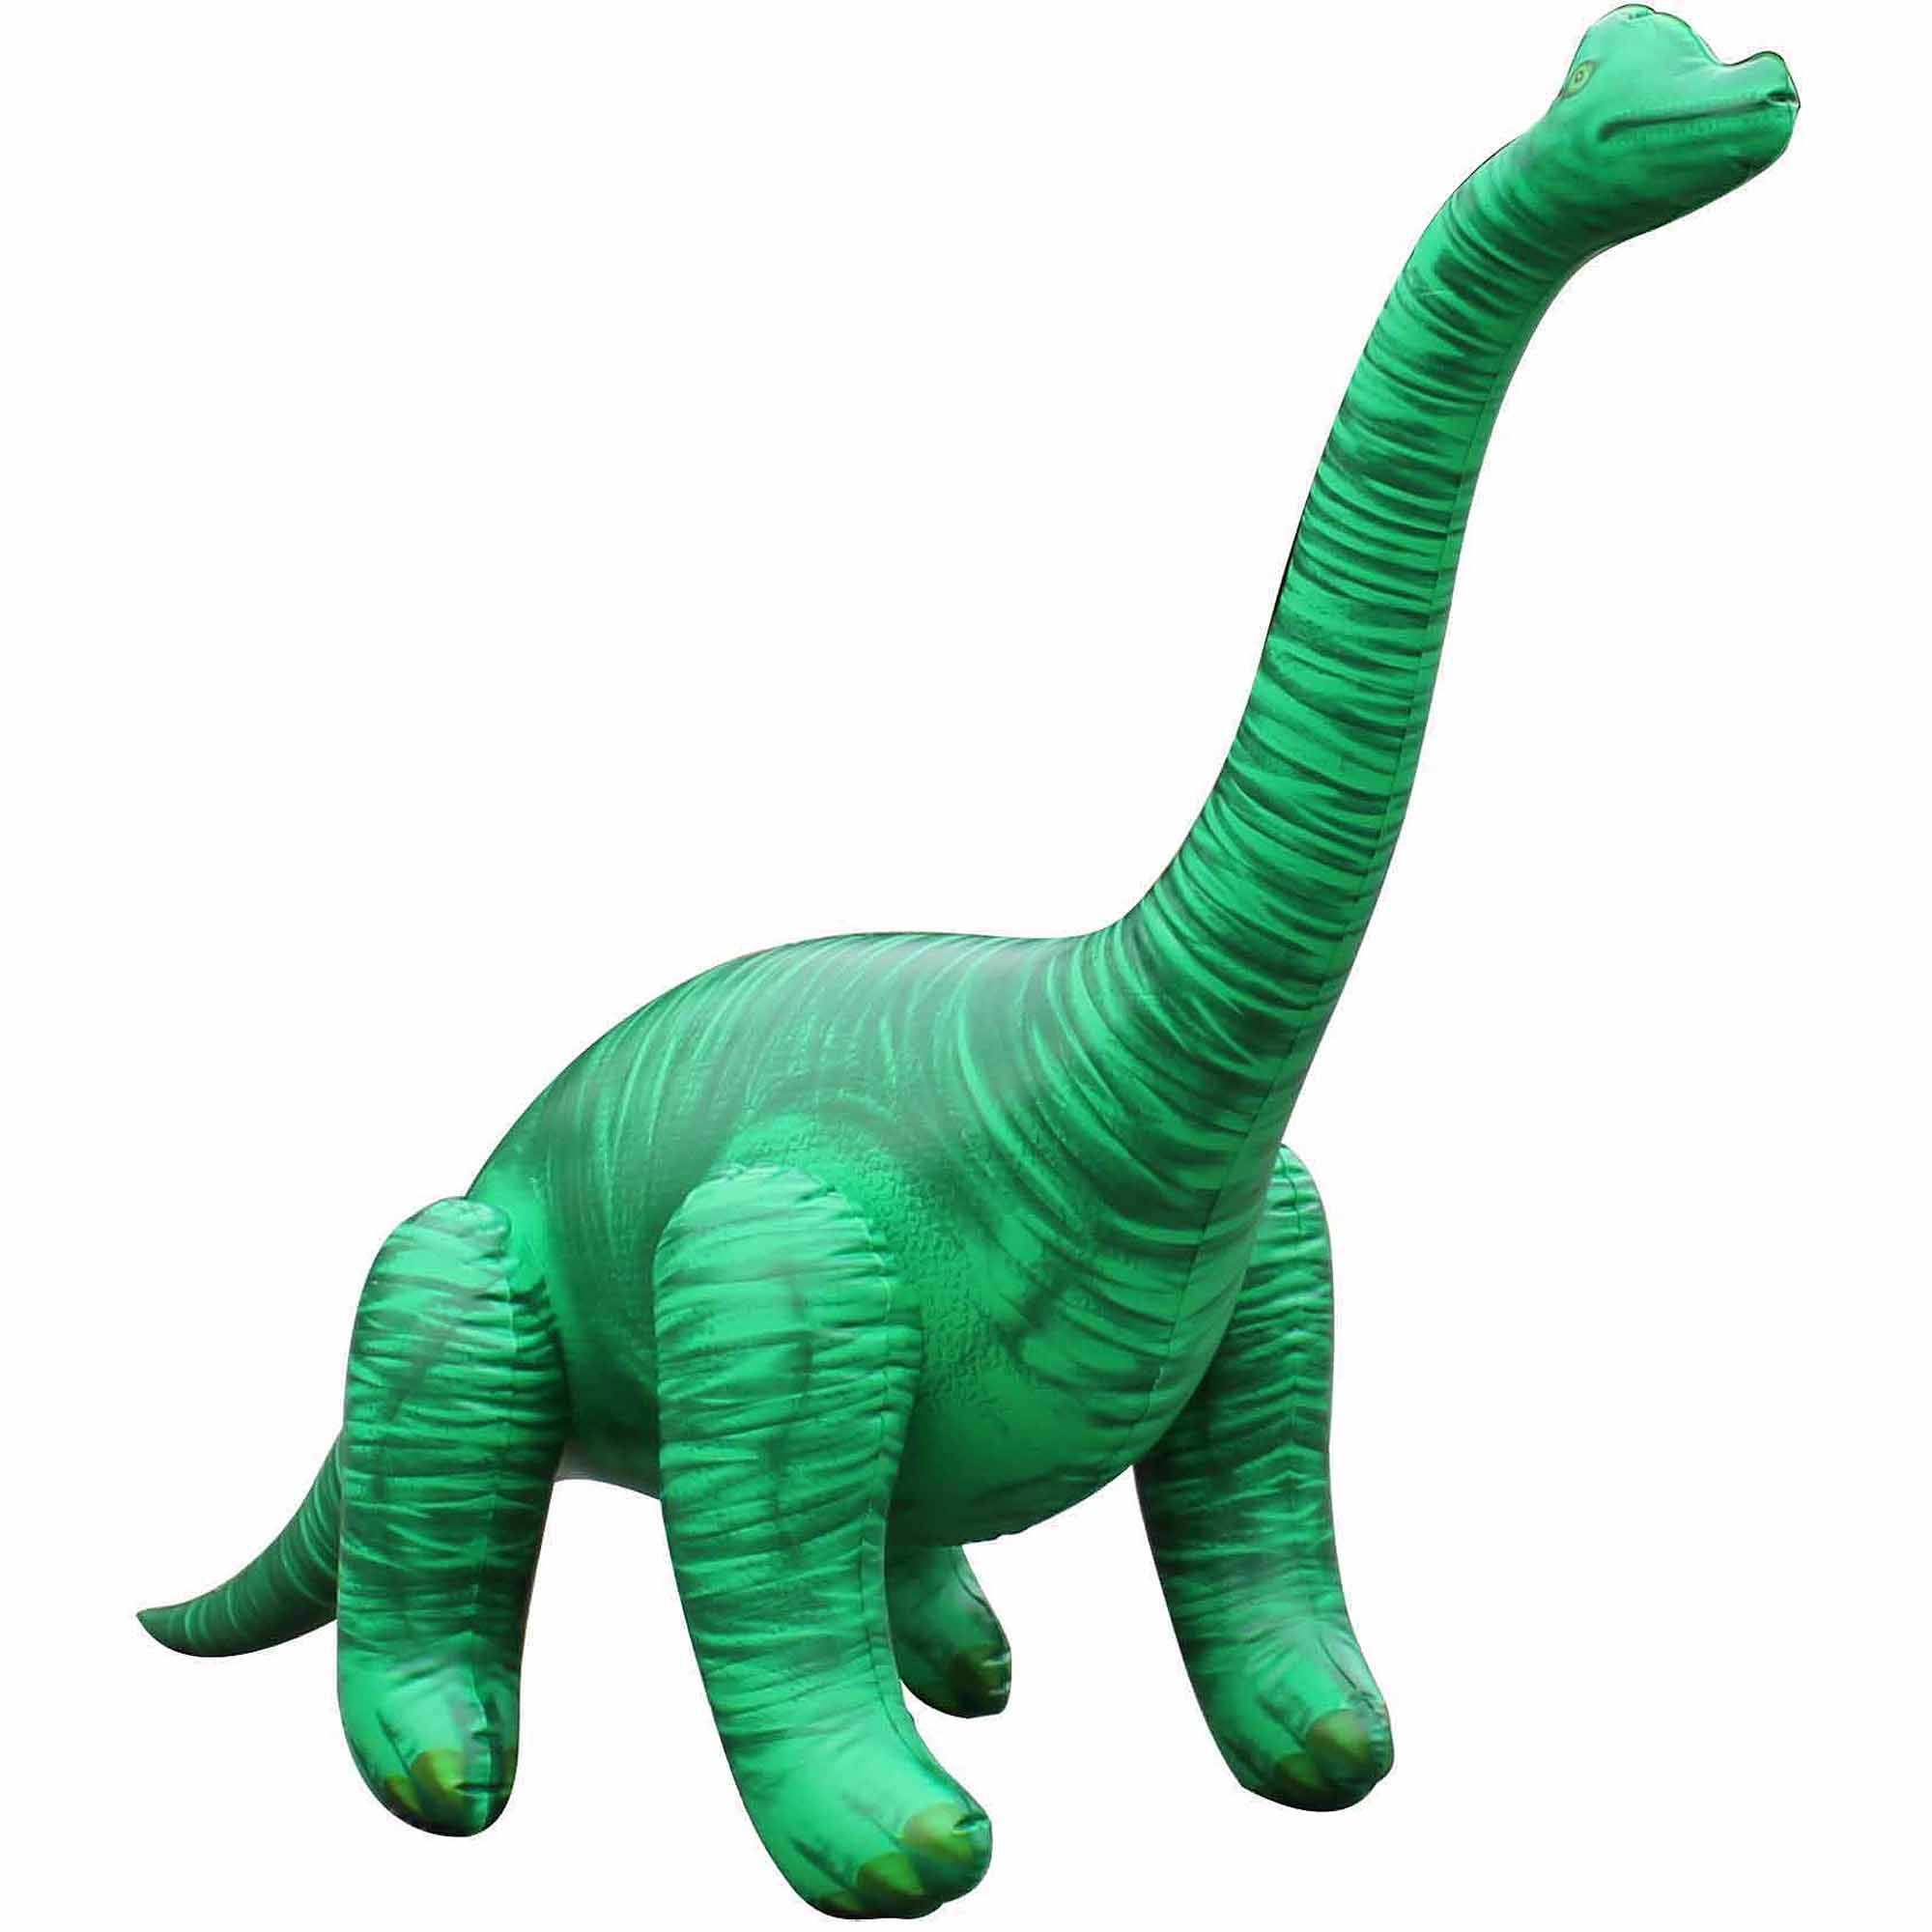 Giant Inflatable Jet Creations  Brachiosaurus Dinosaur 12 feet long . 